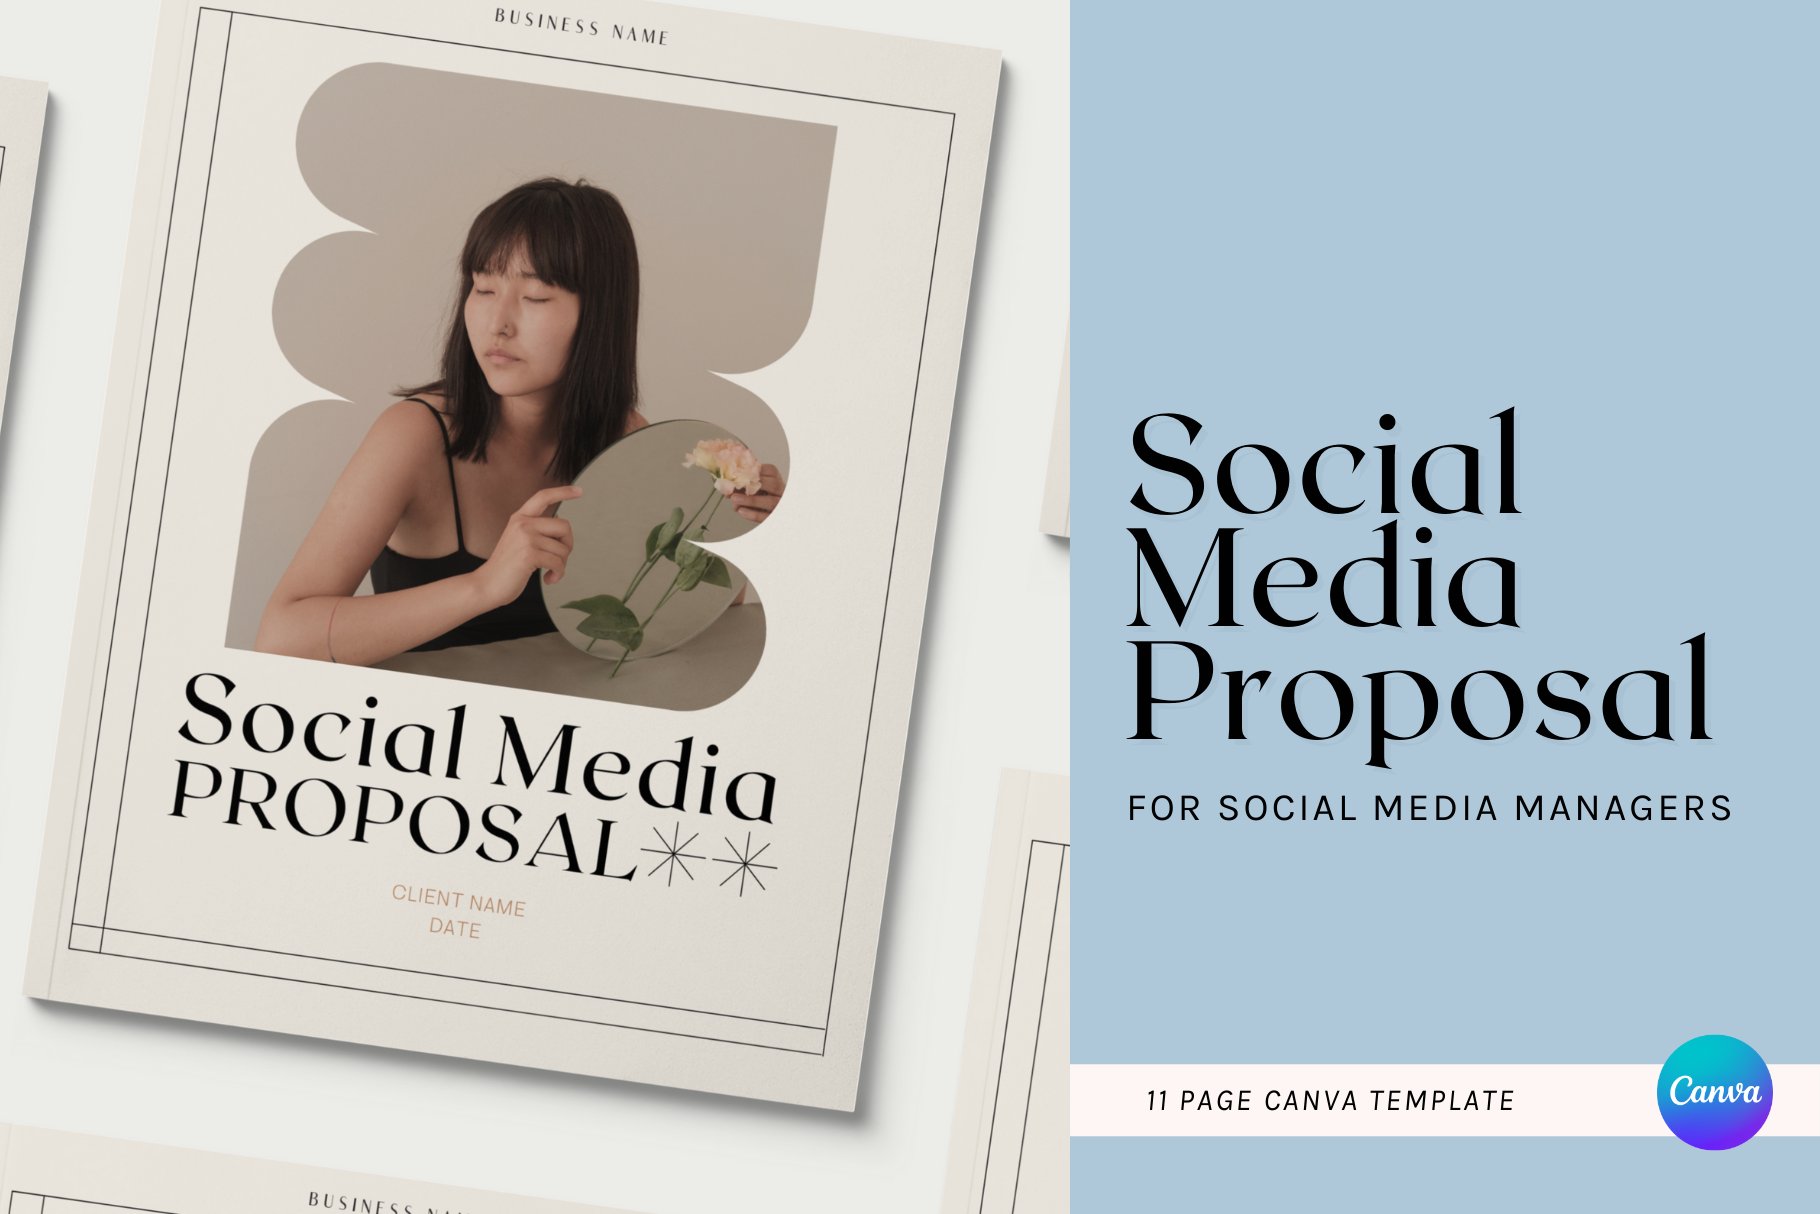 Social Media Service Proposal cover image.